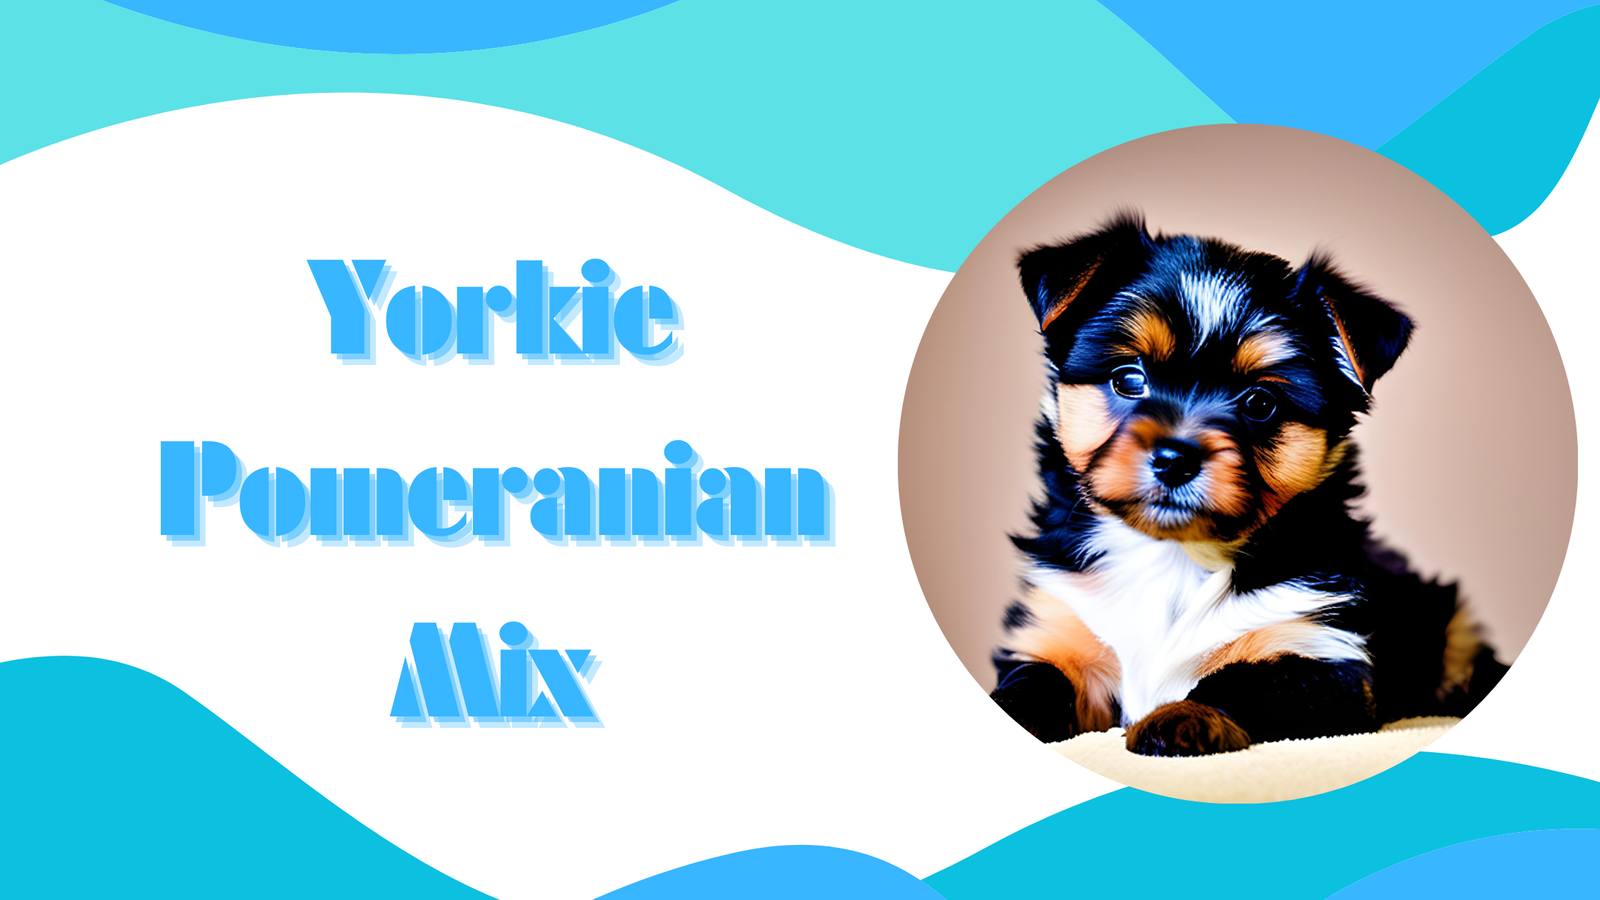 Yorkie Pomeranian Mix: The Adorable and Active Yoranians